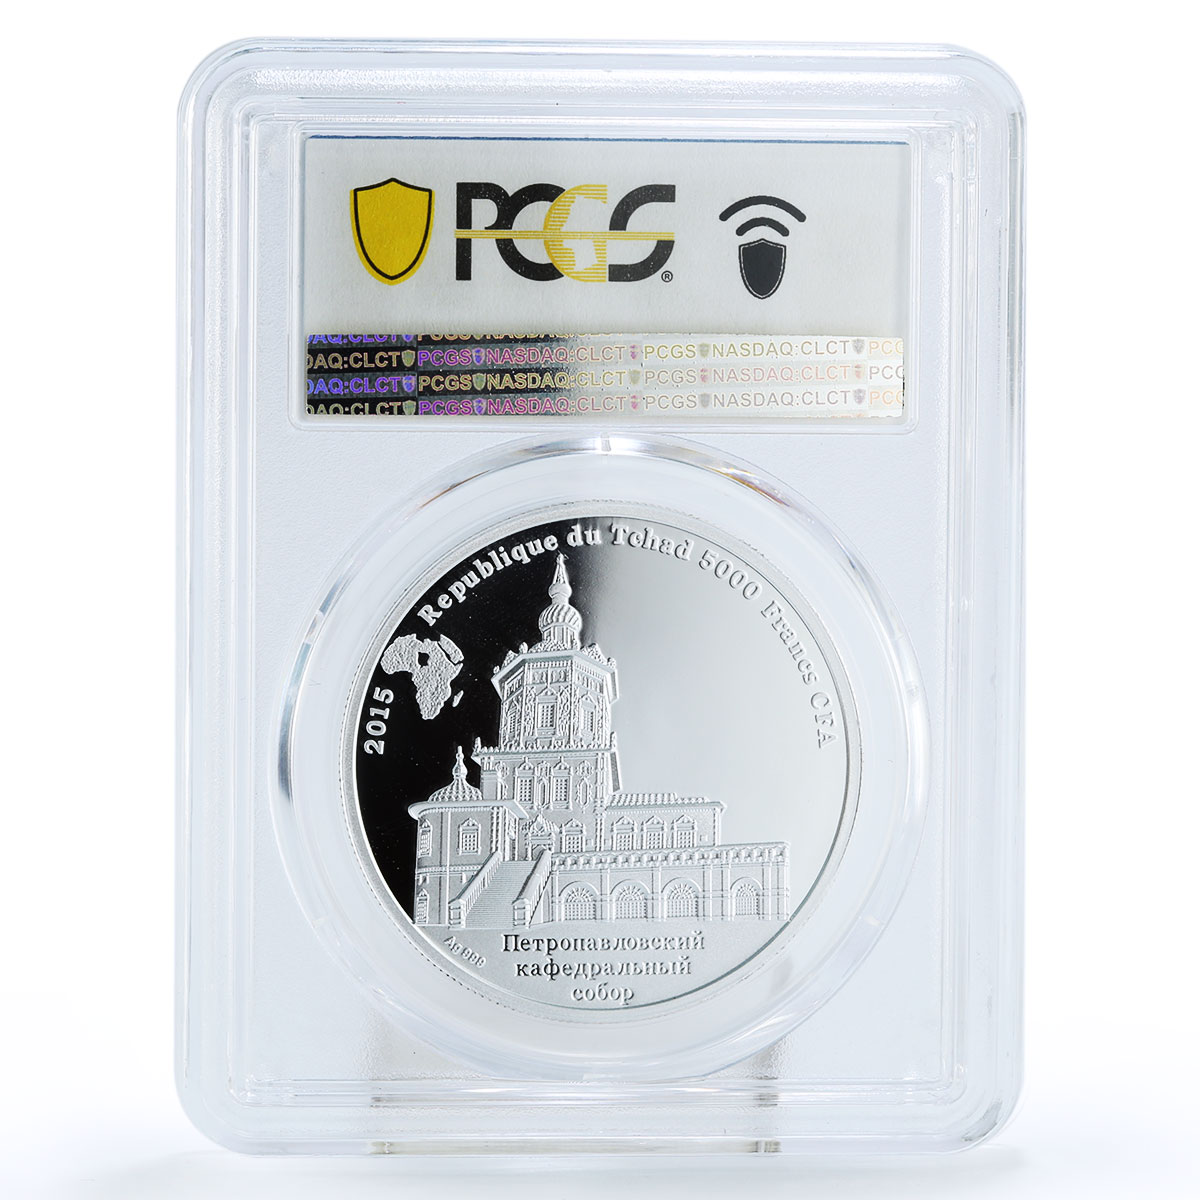 Chad 5000 francs Orthodox Saints St. Panteleimon PR70 PCGS silver coin 2015